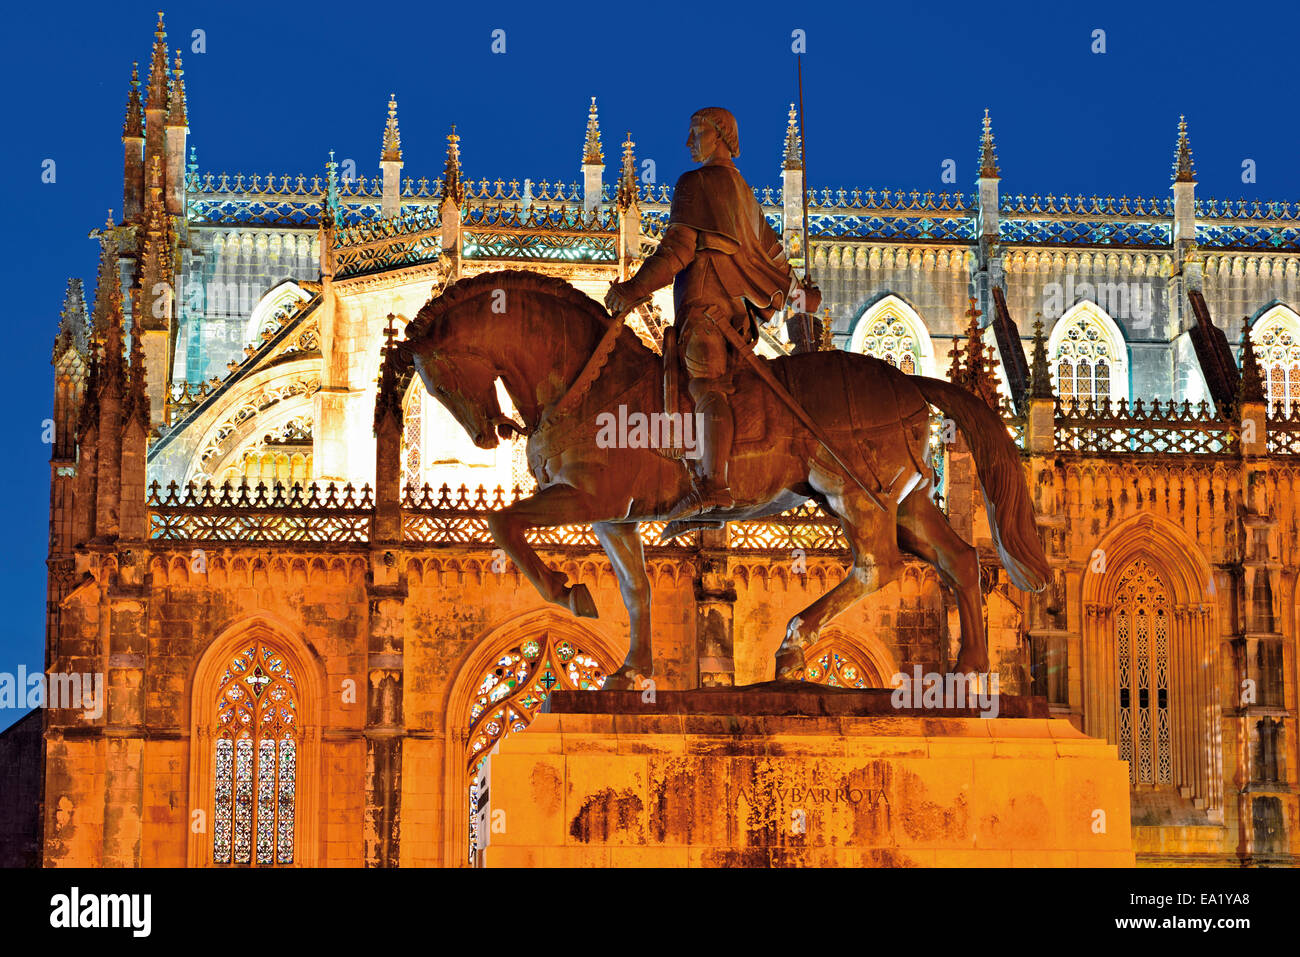 Portugal: Equestrian statue of Nuno Alvares Pereira and lateral view of the Monastery Santa Maria da Batalha Stock Photo